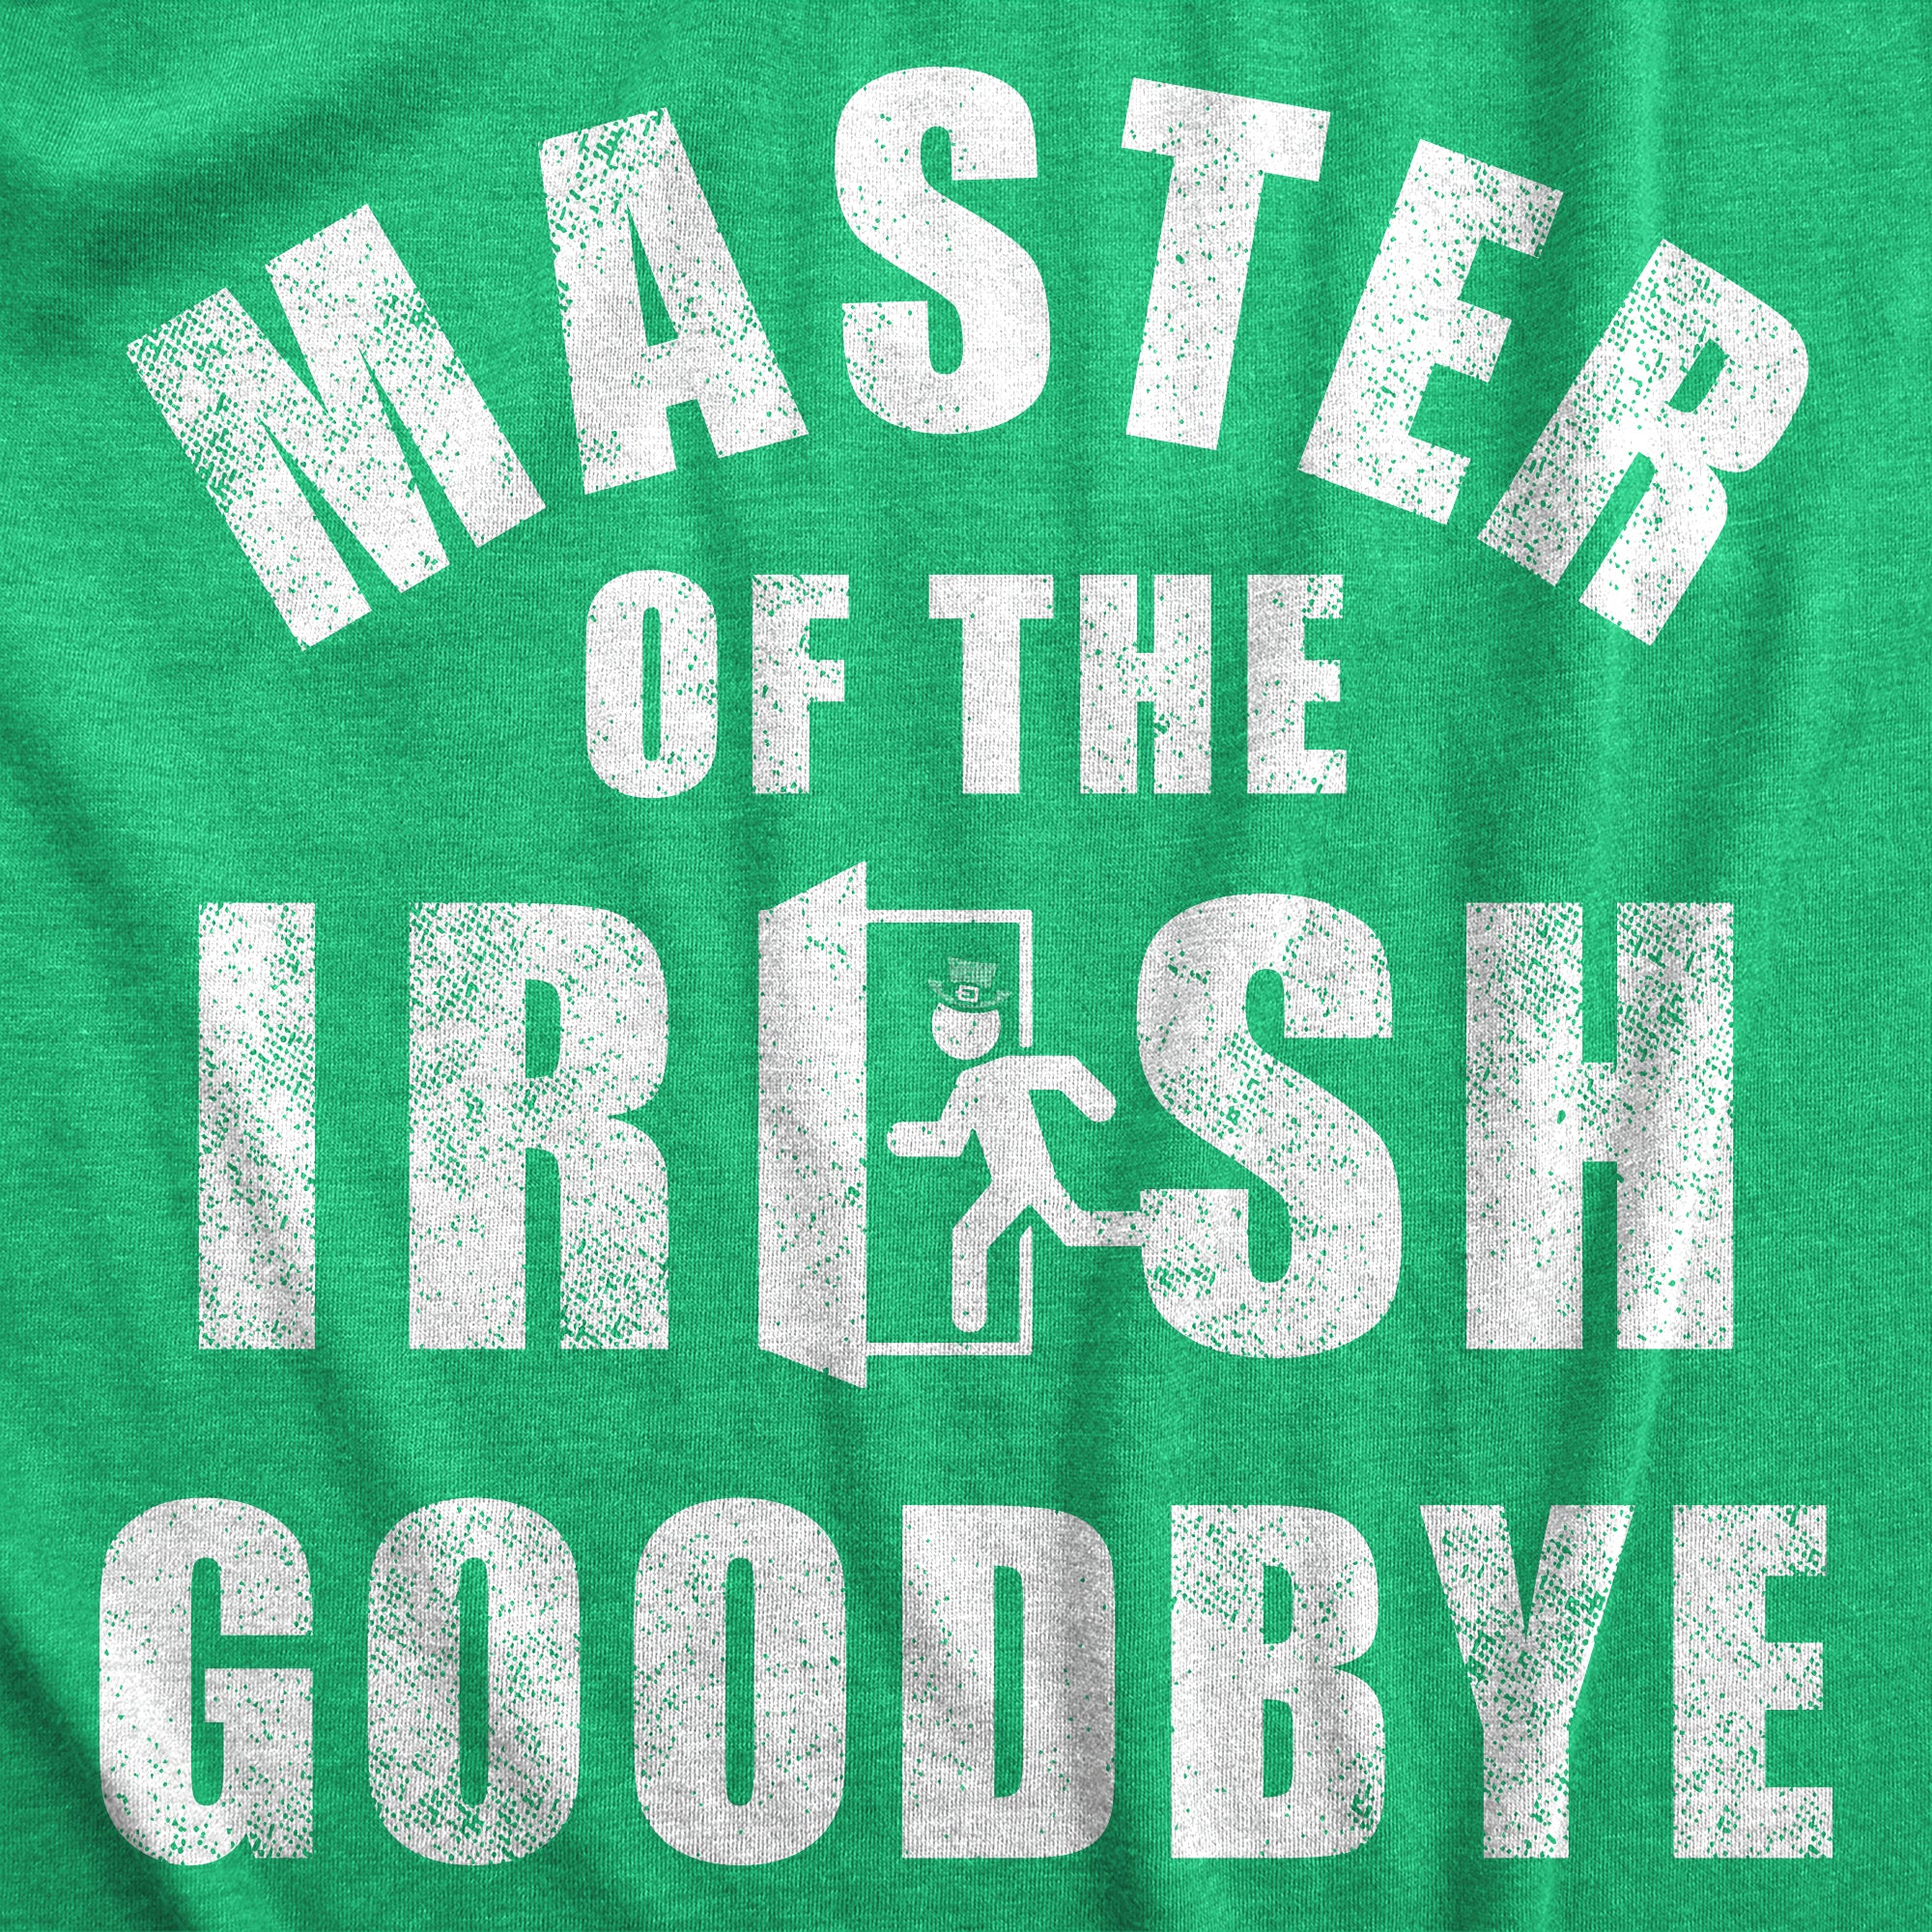 Funny Heather Green - GOODBYE Master Of The Irish Goodbye Mens T Shirt Nerdy Sarcastic Tee